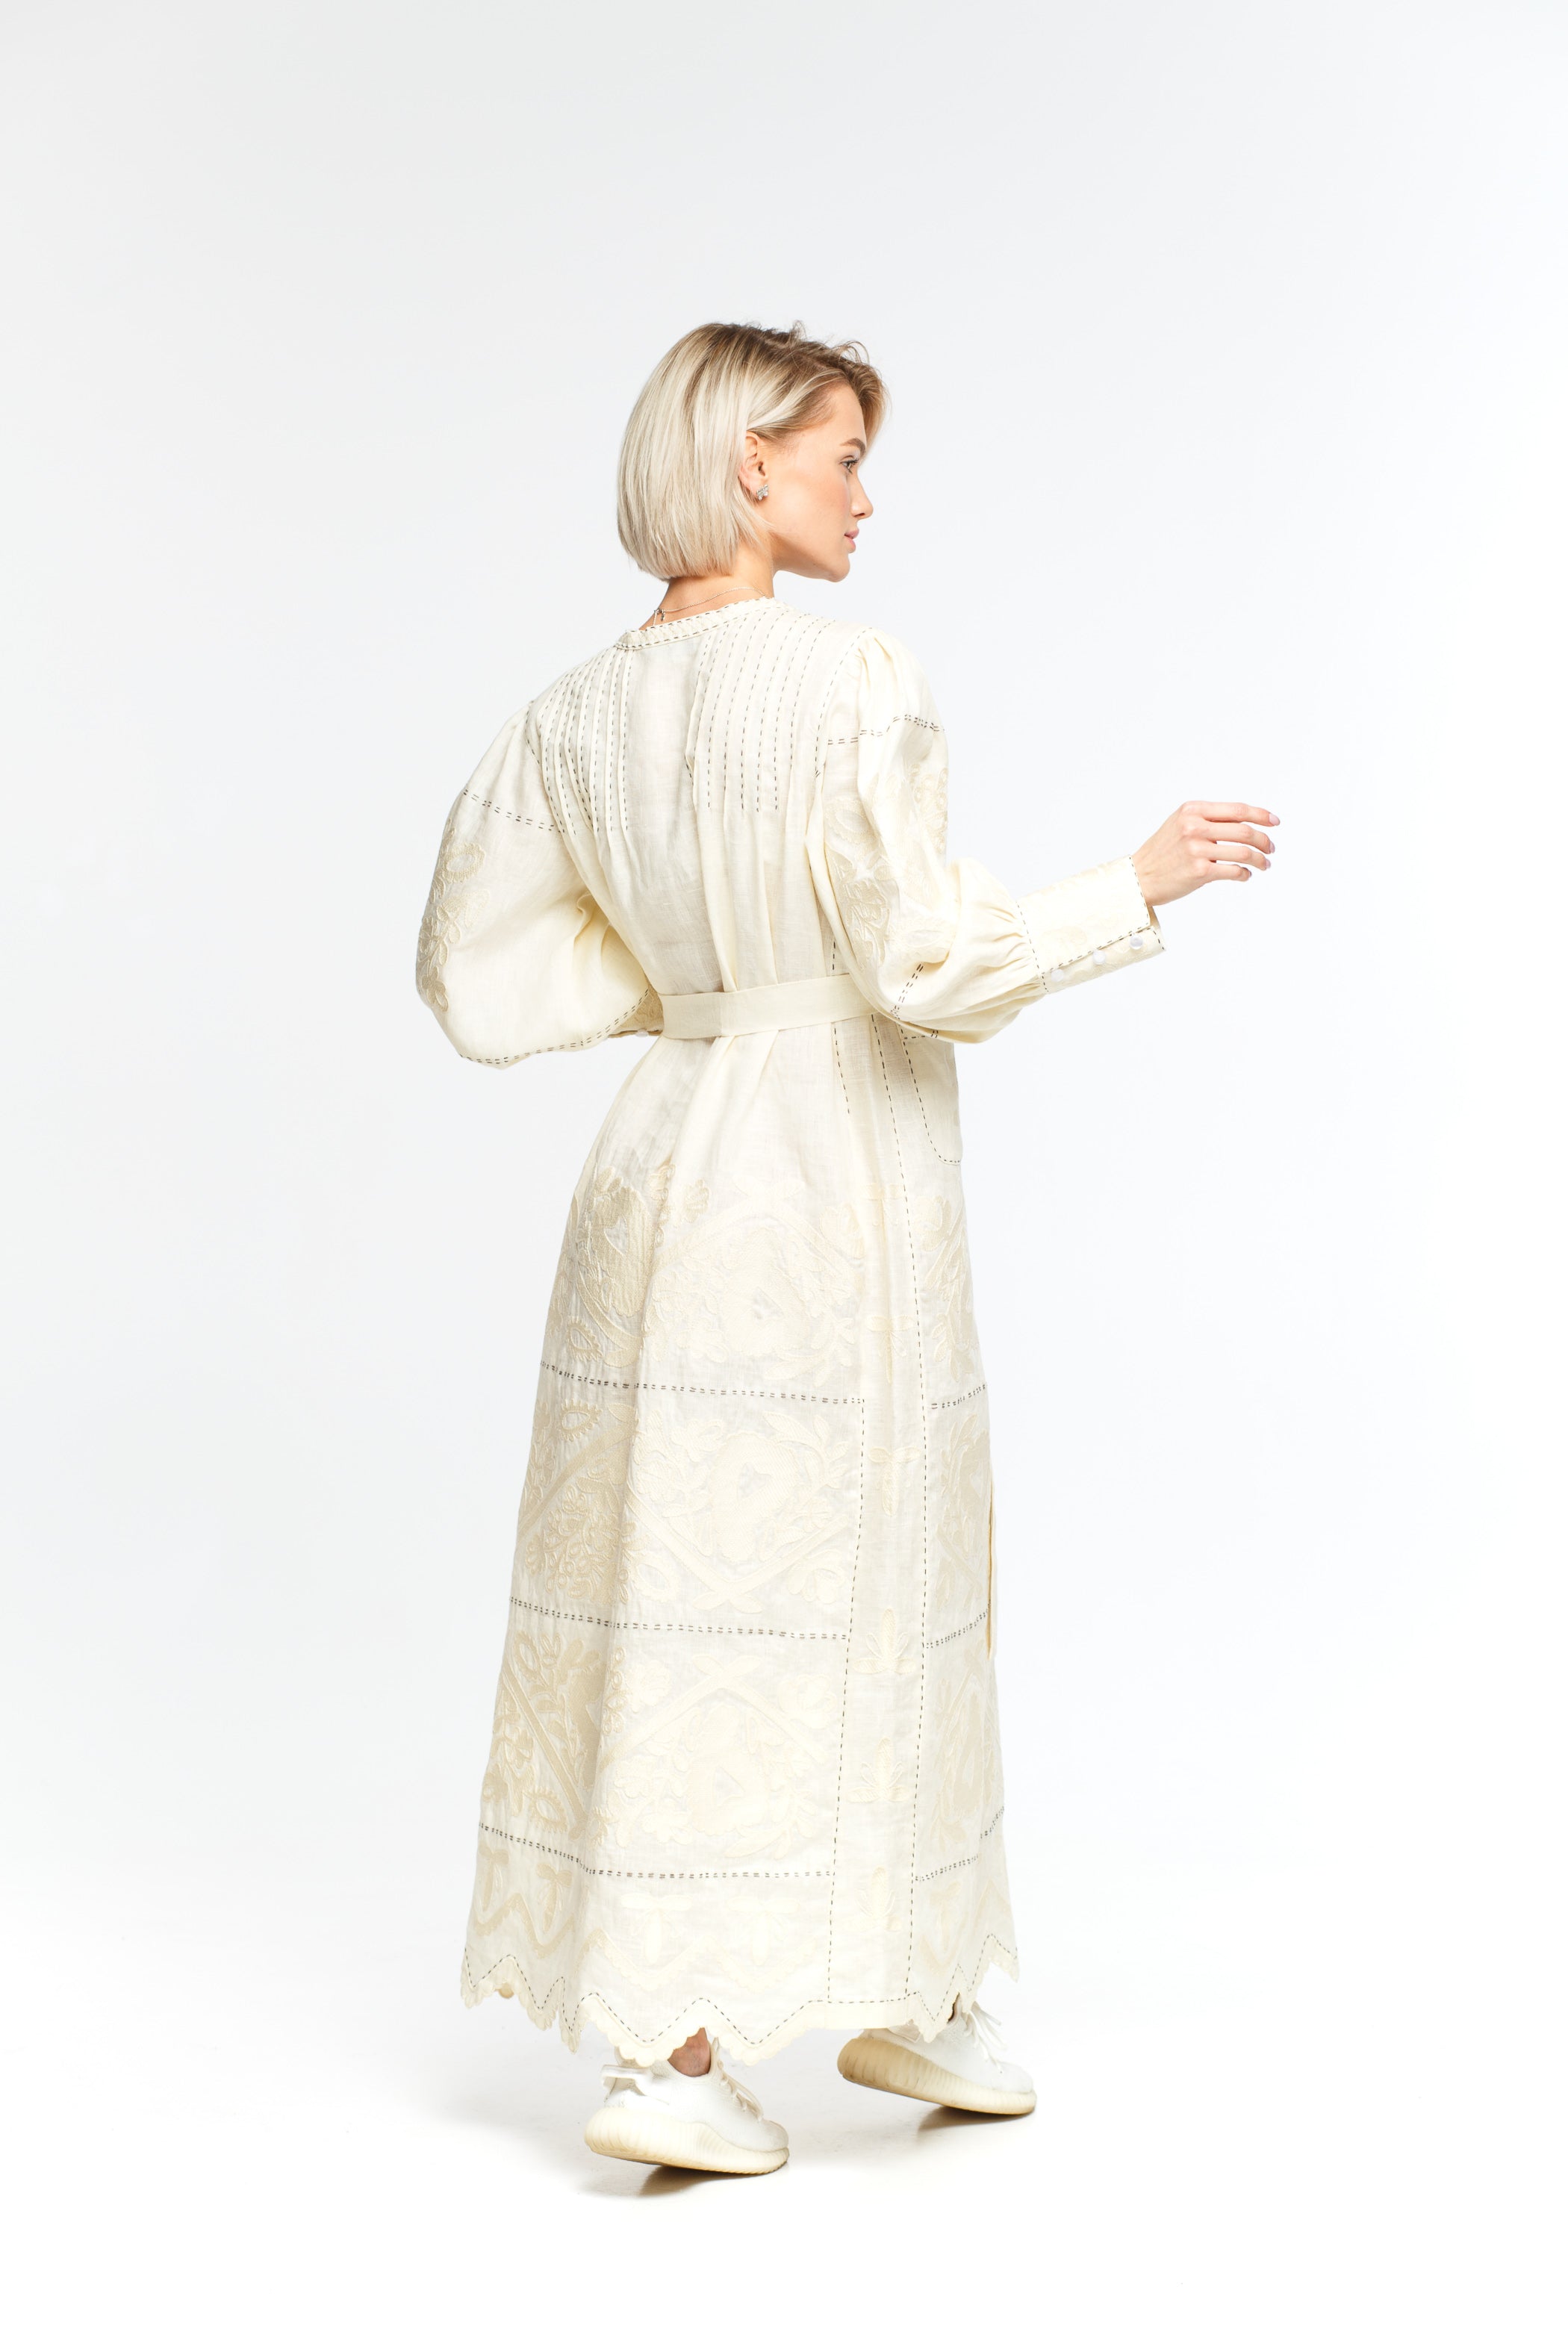 Rushka ivory embroidered wedding dress Fashion bohemian gown